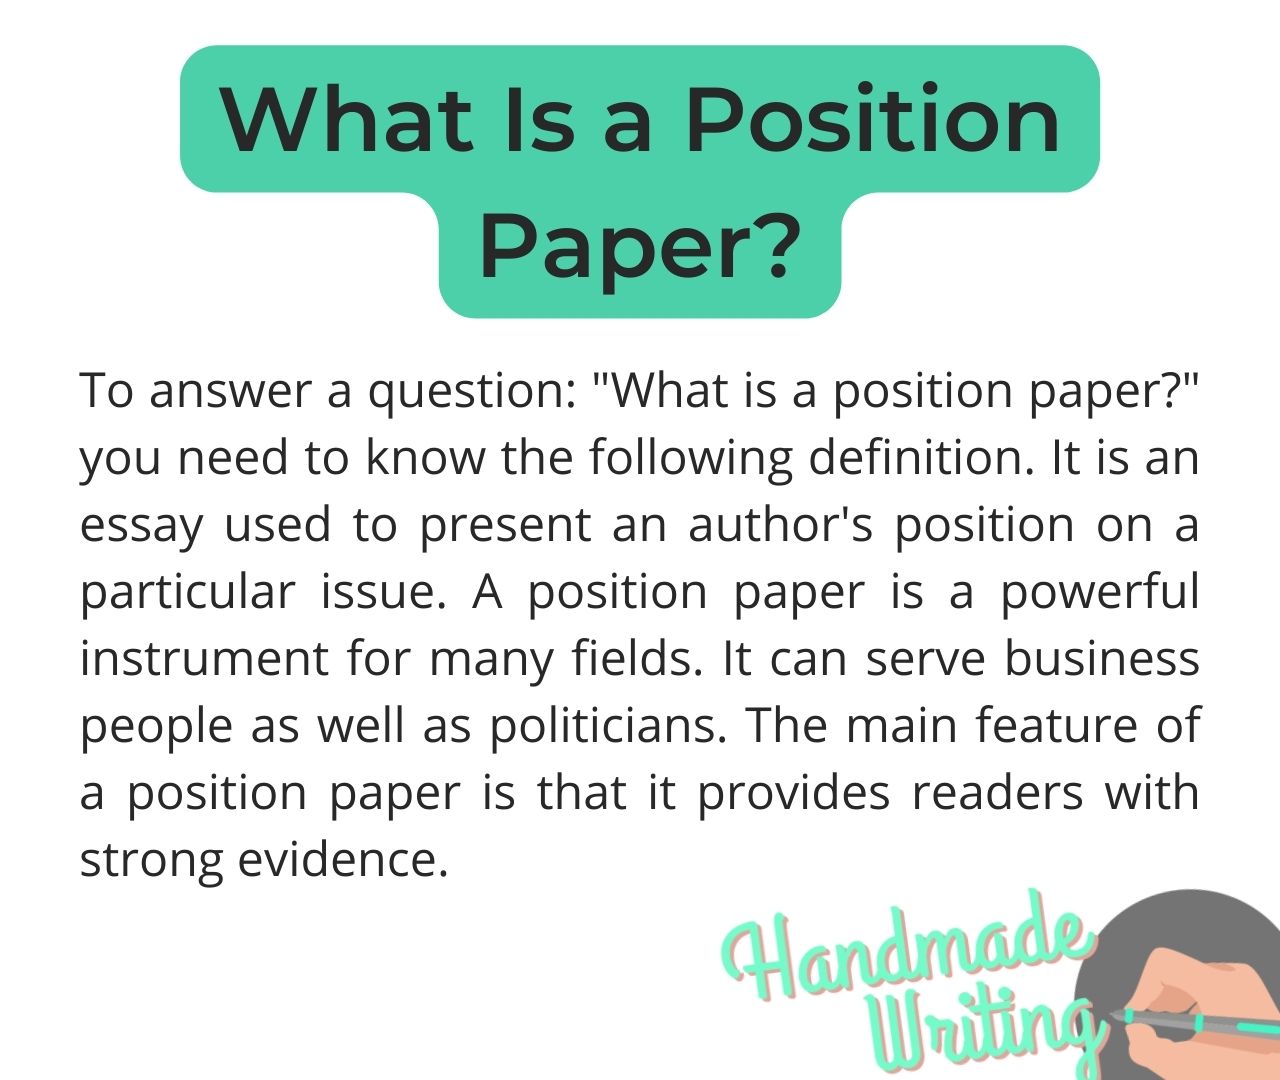 concept paper essay example